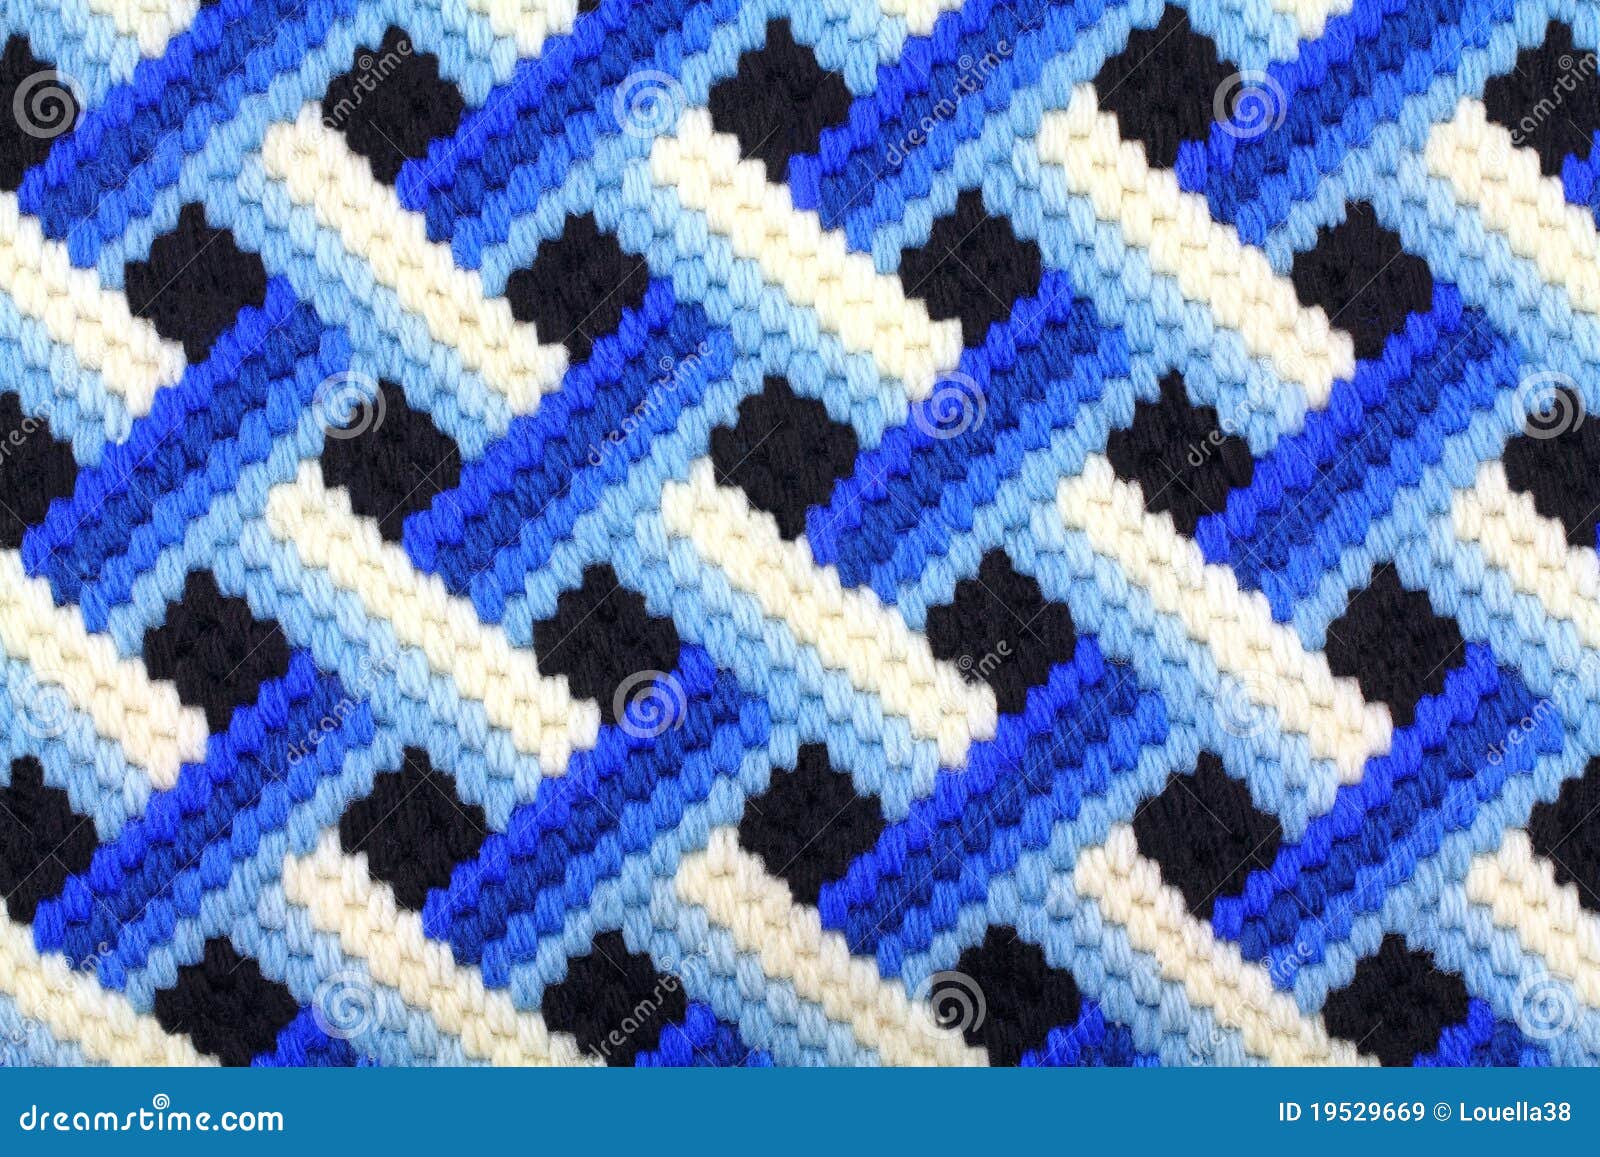 bargello blue latticework 